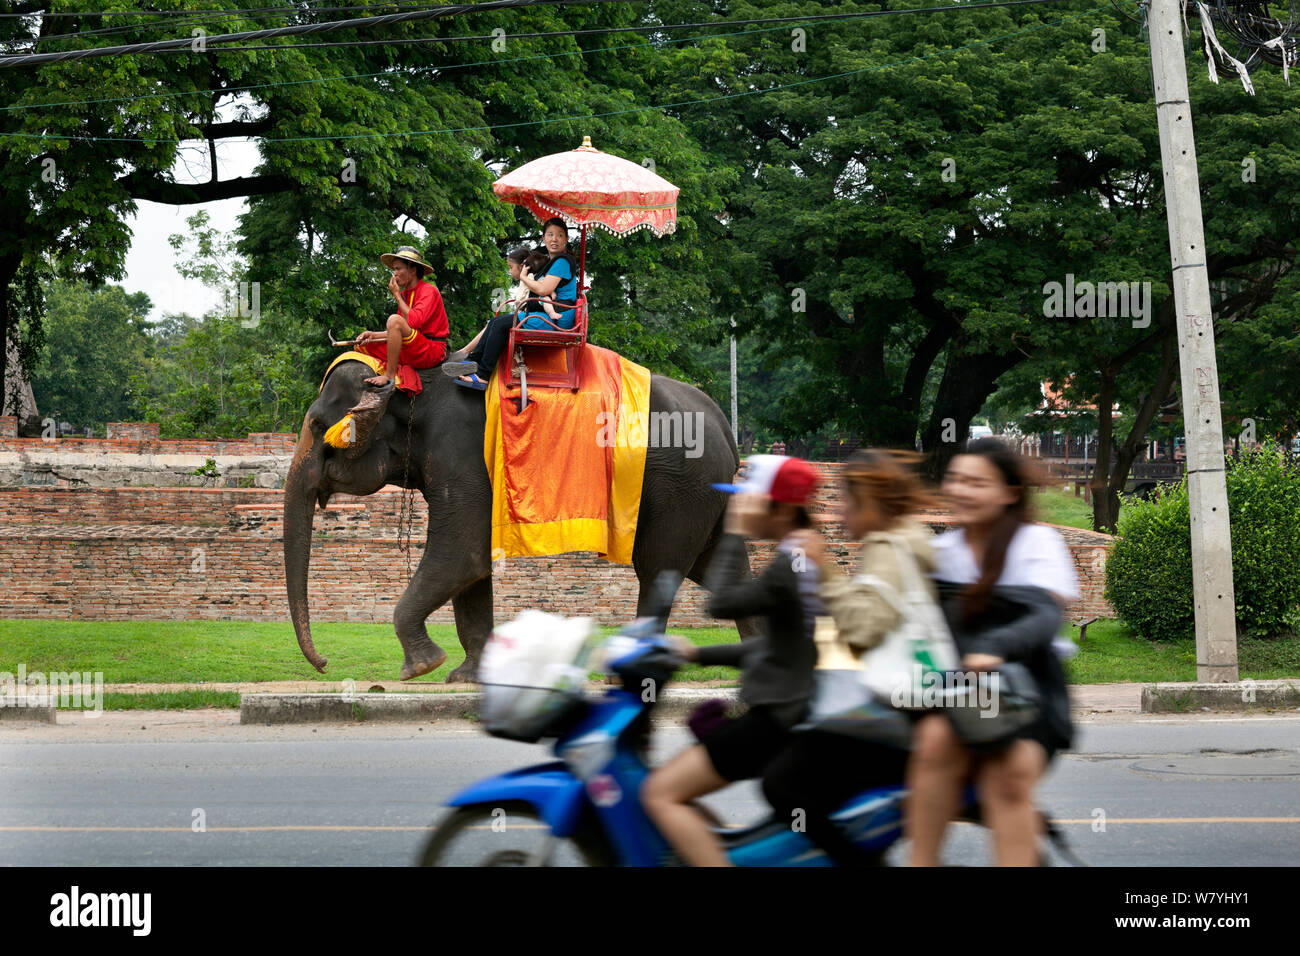 Tourists on Indian elephant (Elephas maximus) ride, historical town of Ayutthaya, Thailand, September 2014. Stock Photo